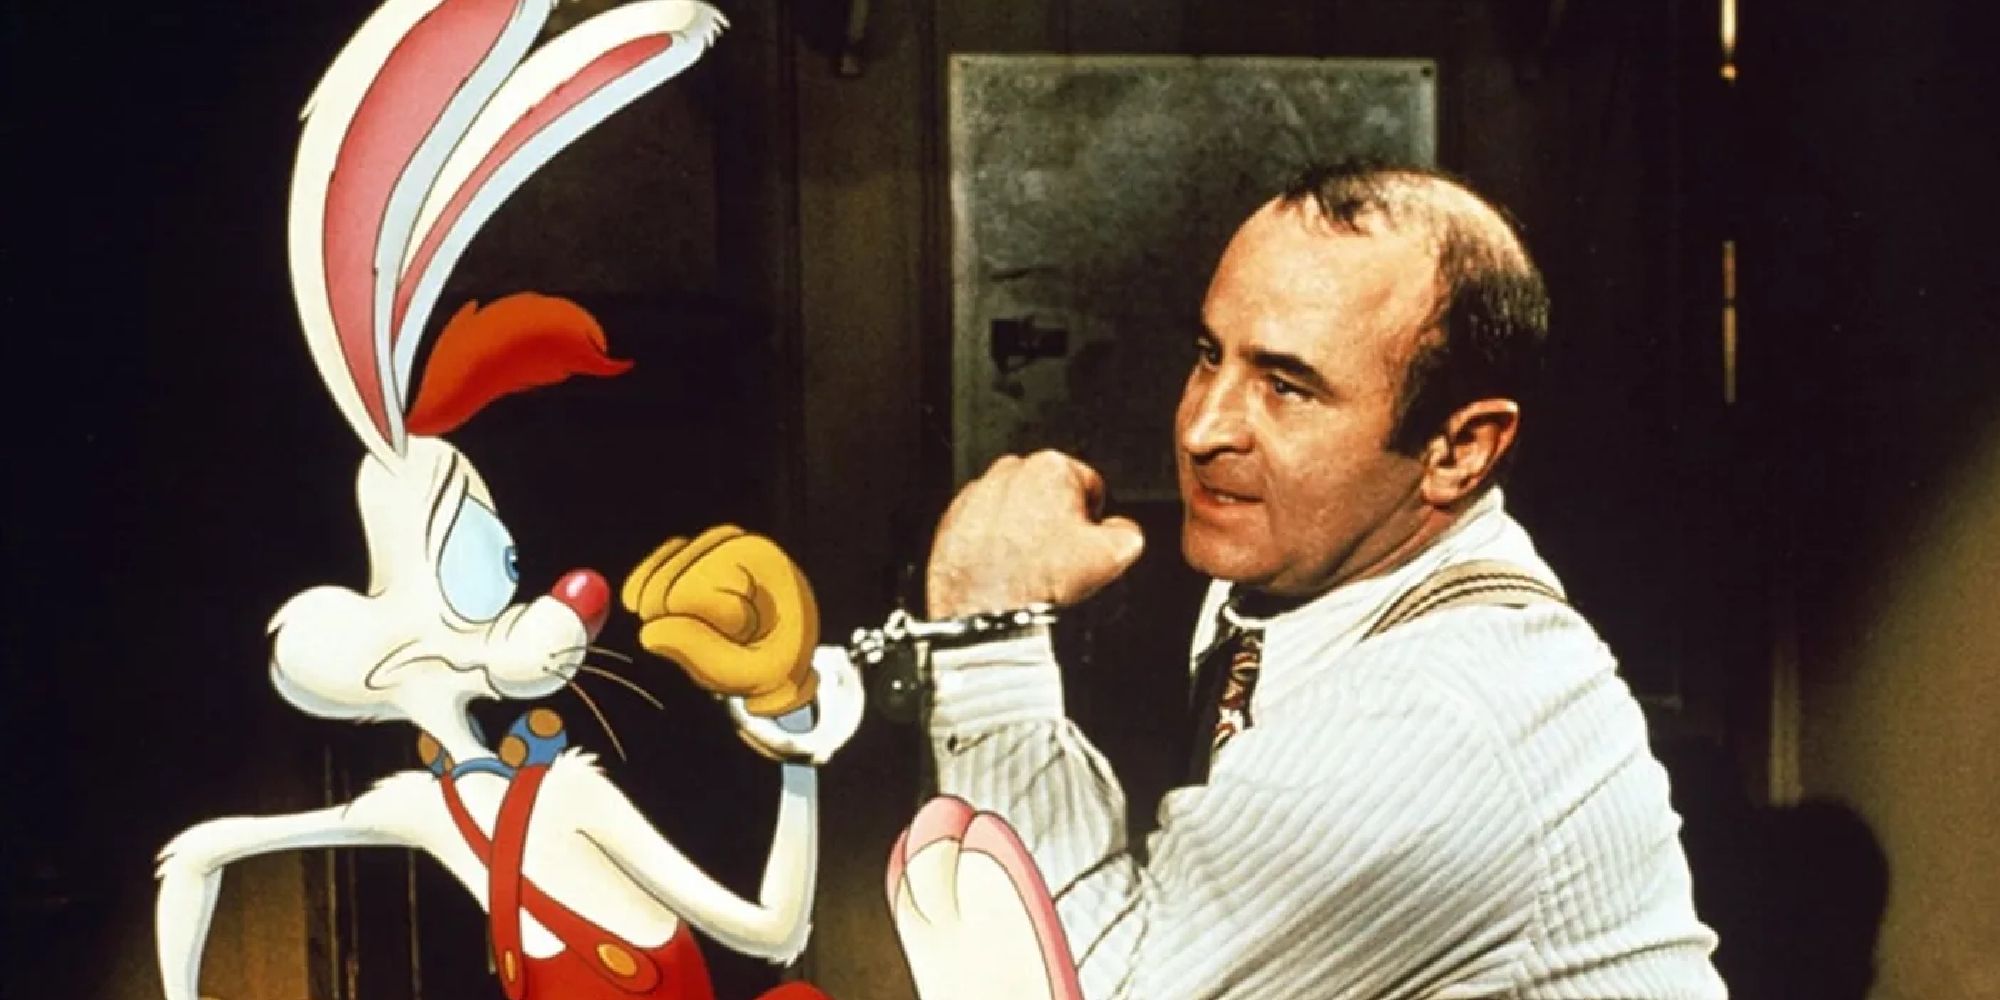 Roger Rabbit handcuffed to Bob Haskins as Eddie Valiant in Who Framed Roger Rabbit